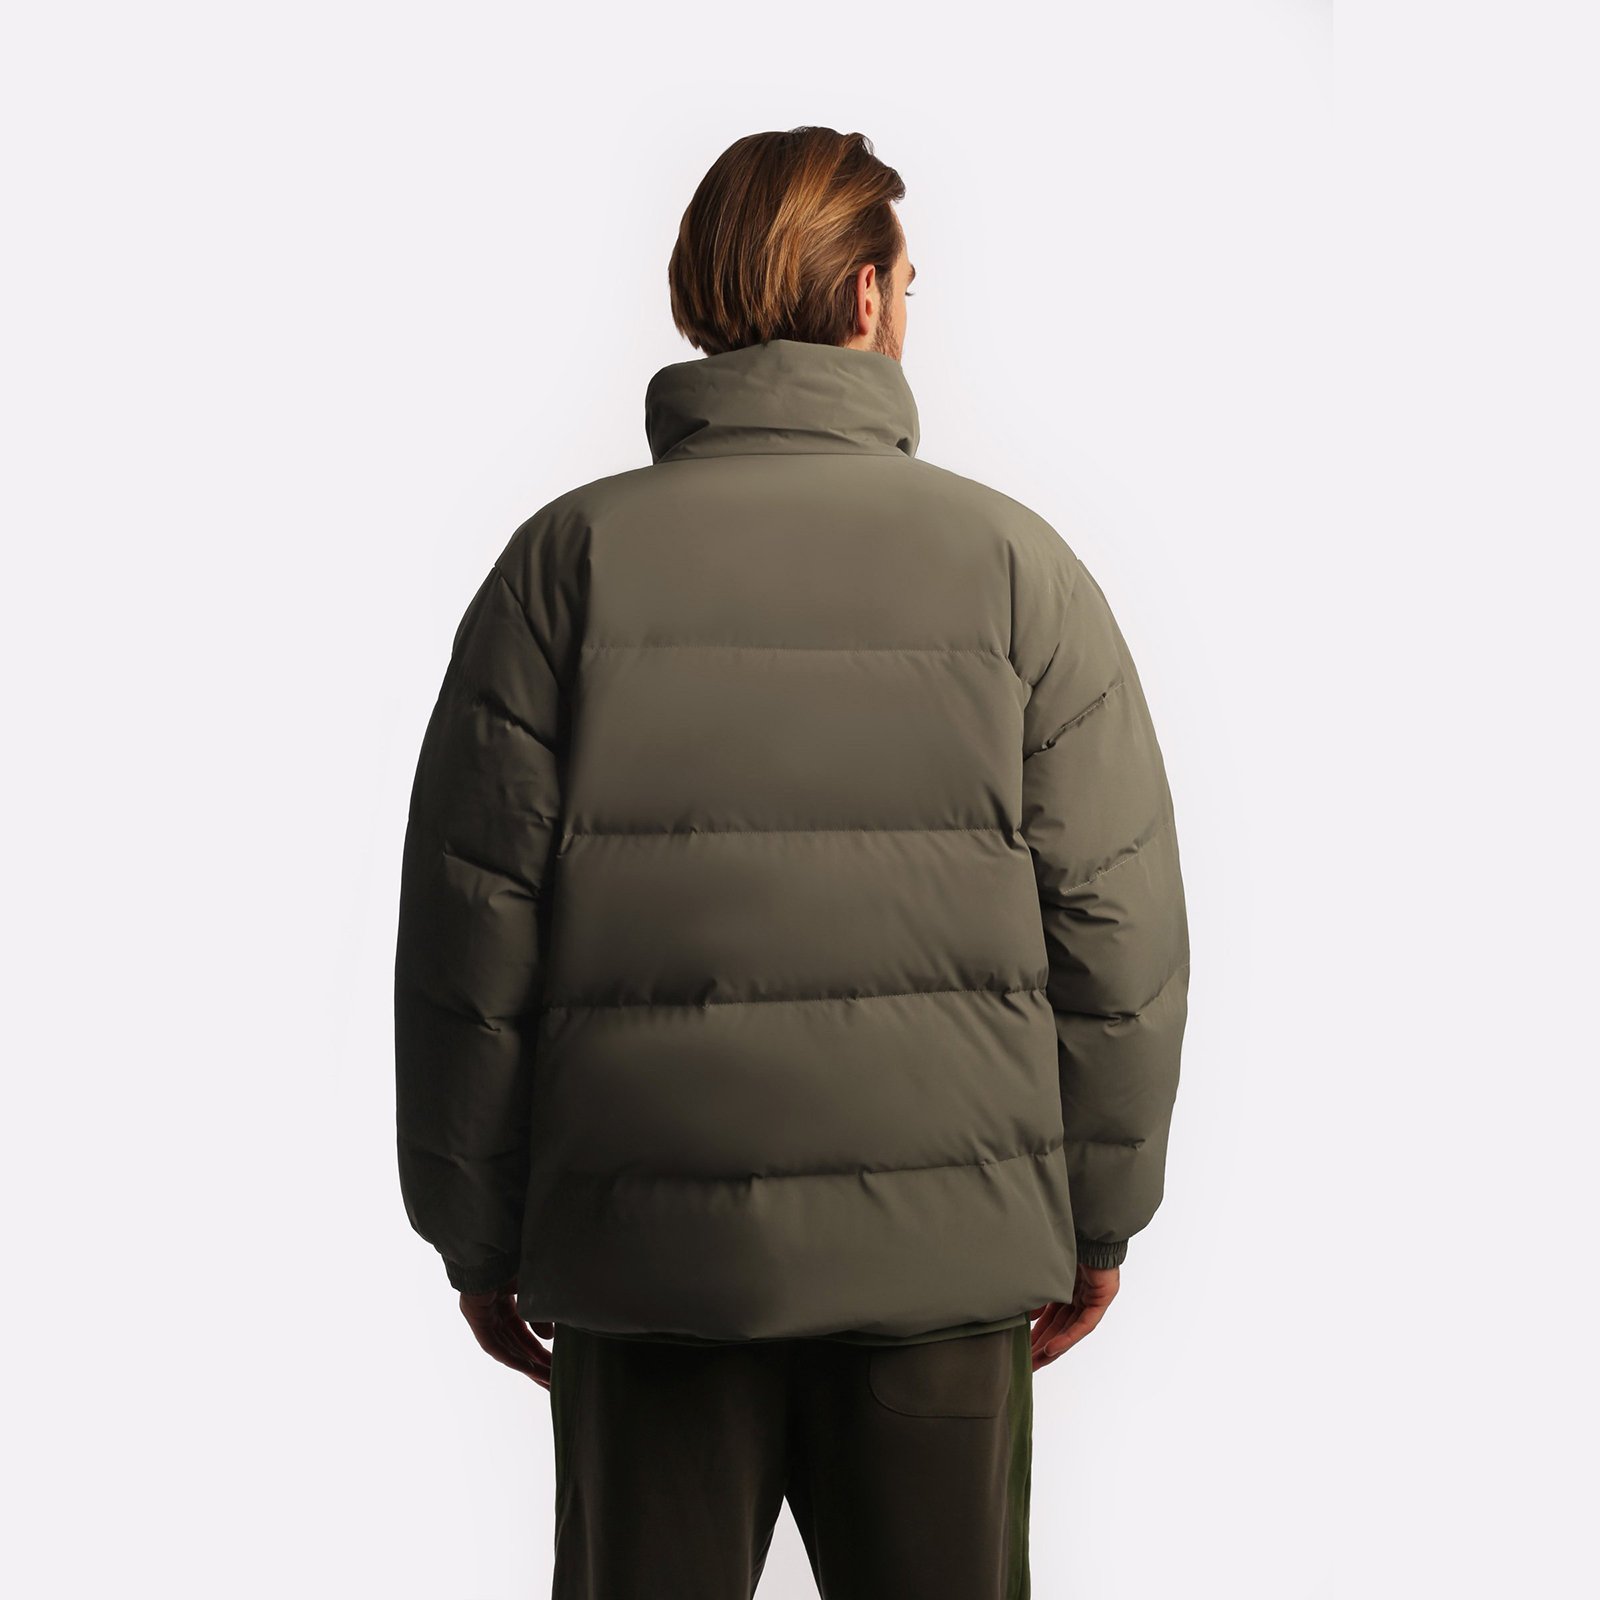 мужская куртка Carhartt WIP Danville Jacket  (I029450-barista/black)  - цена, описание, фото 3